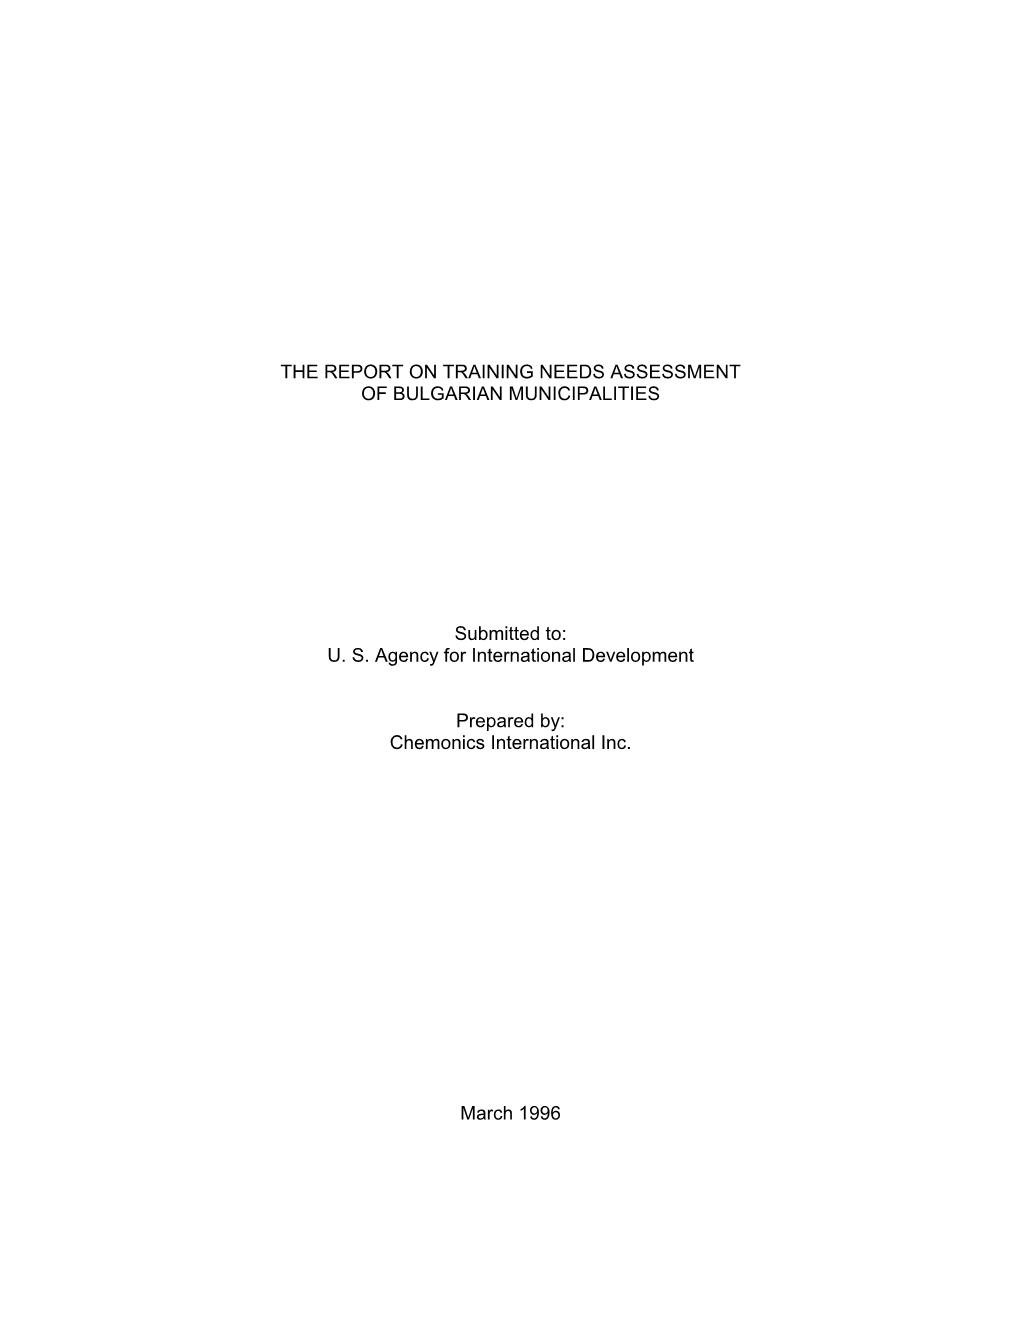 The Report on Training Needs Assessment of Bulgarian Municipalities